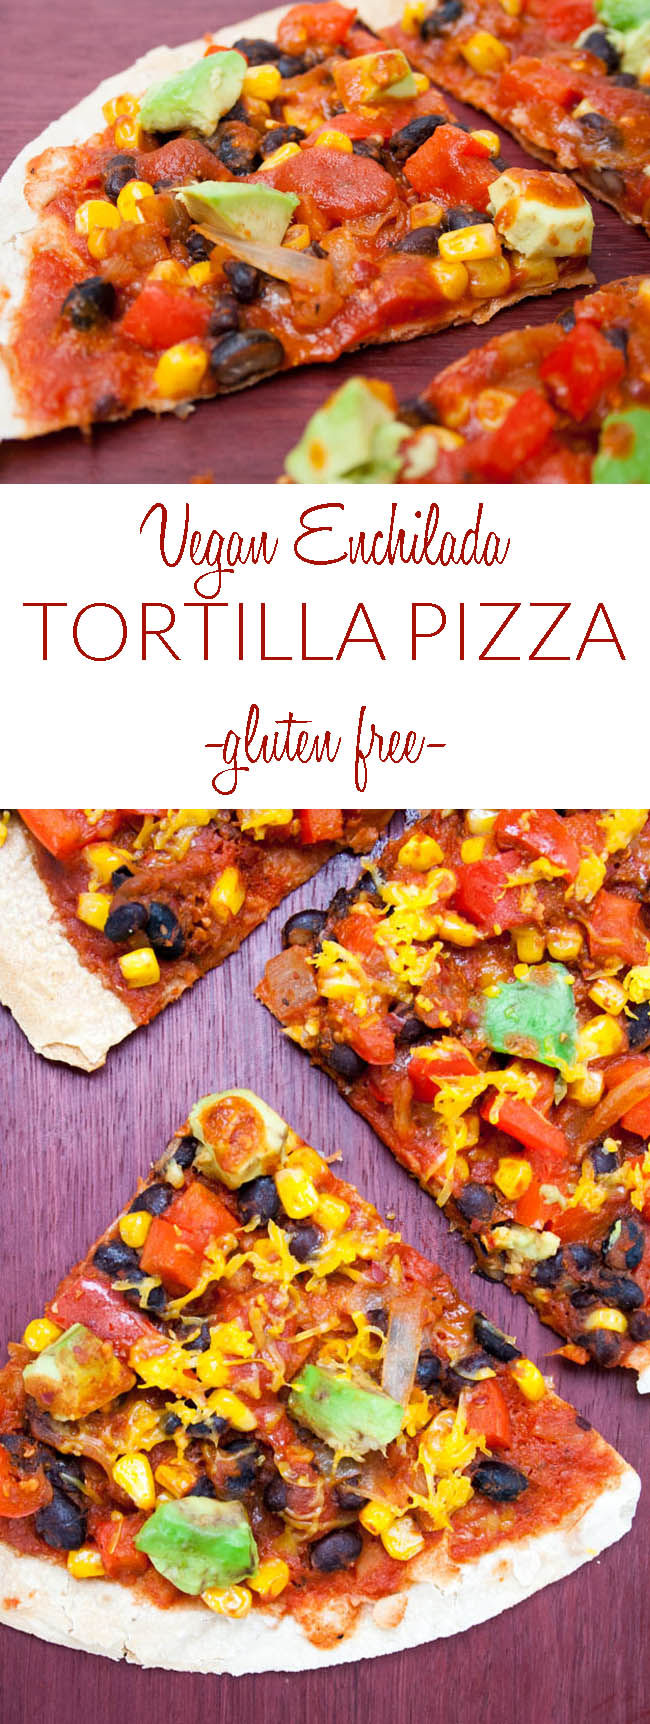 Vegan Enchilada Tortilla Pizza collage photo with text.